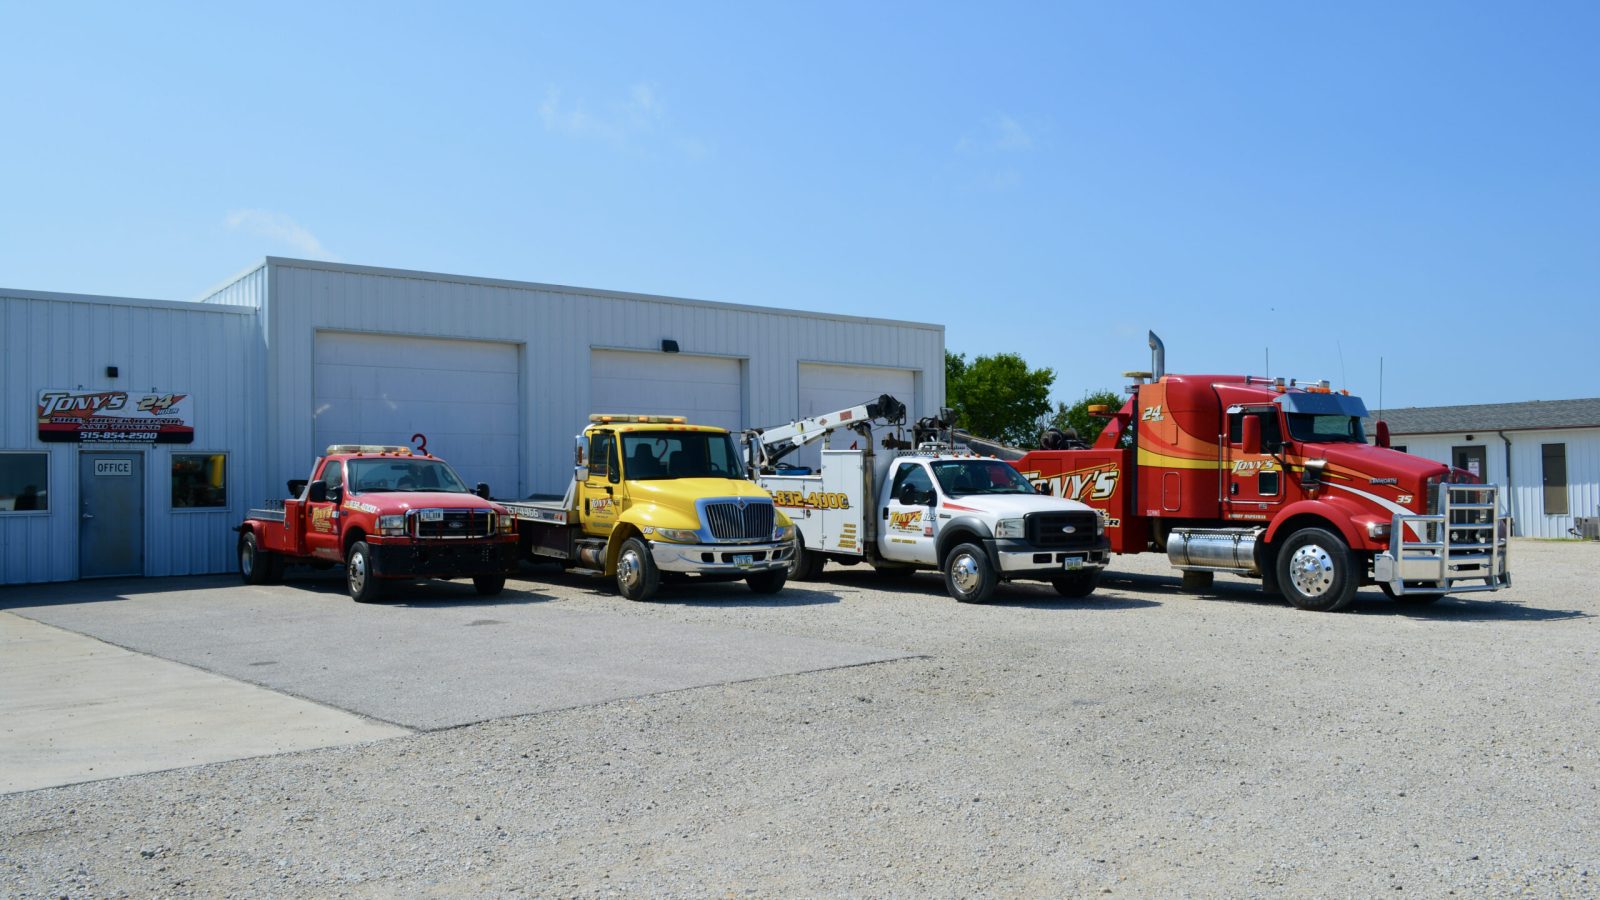 Tony's Tire, Truck & Towing fleet at Williams location in Iowa.